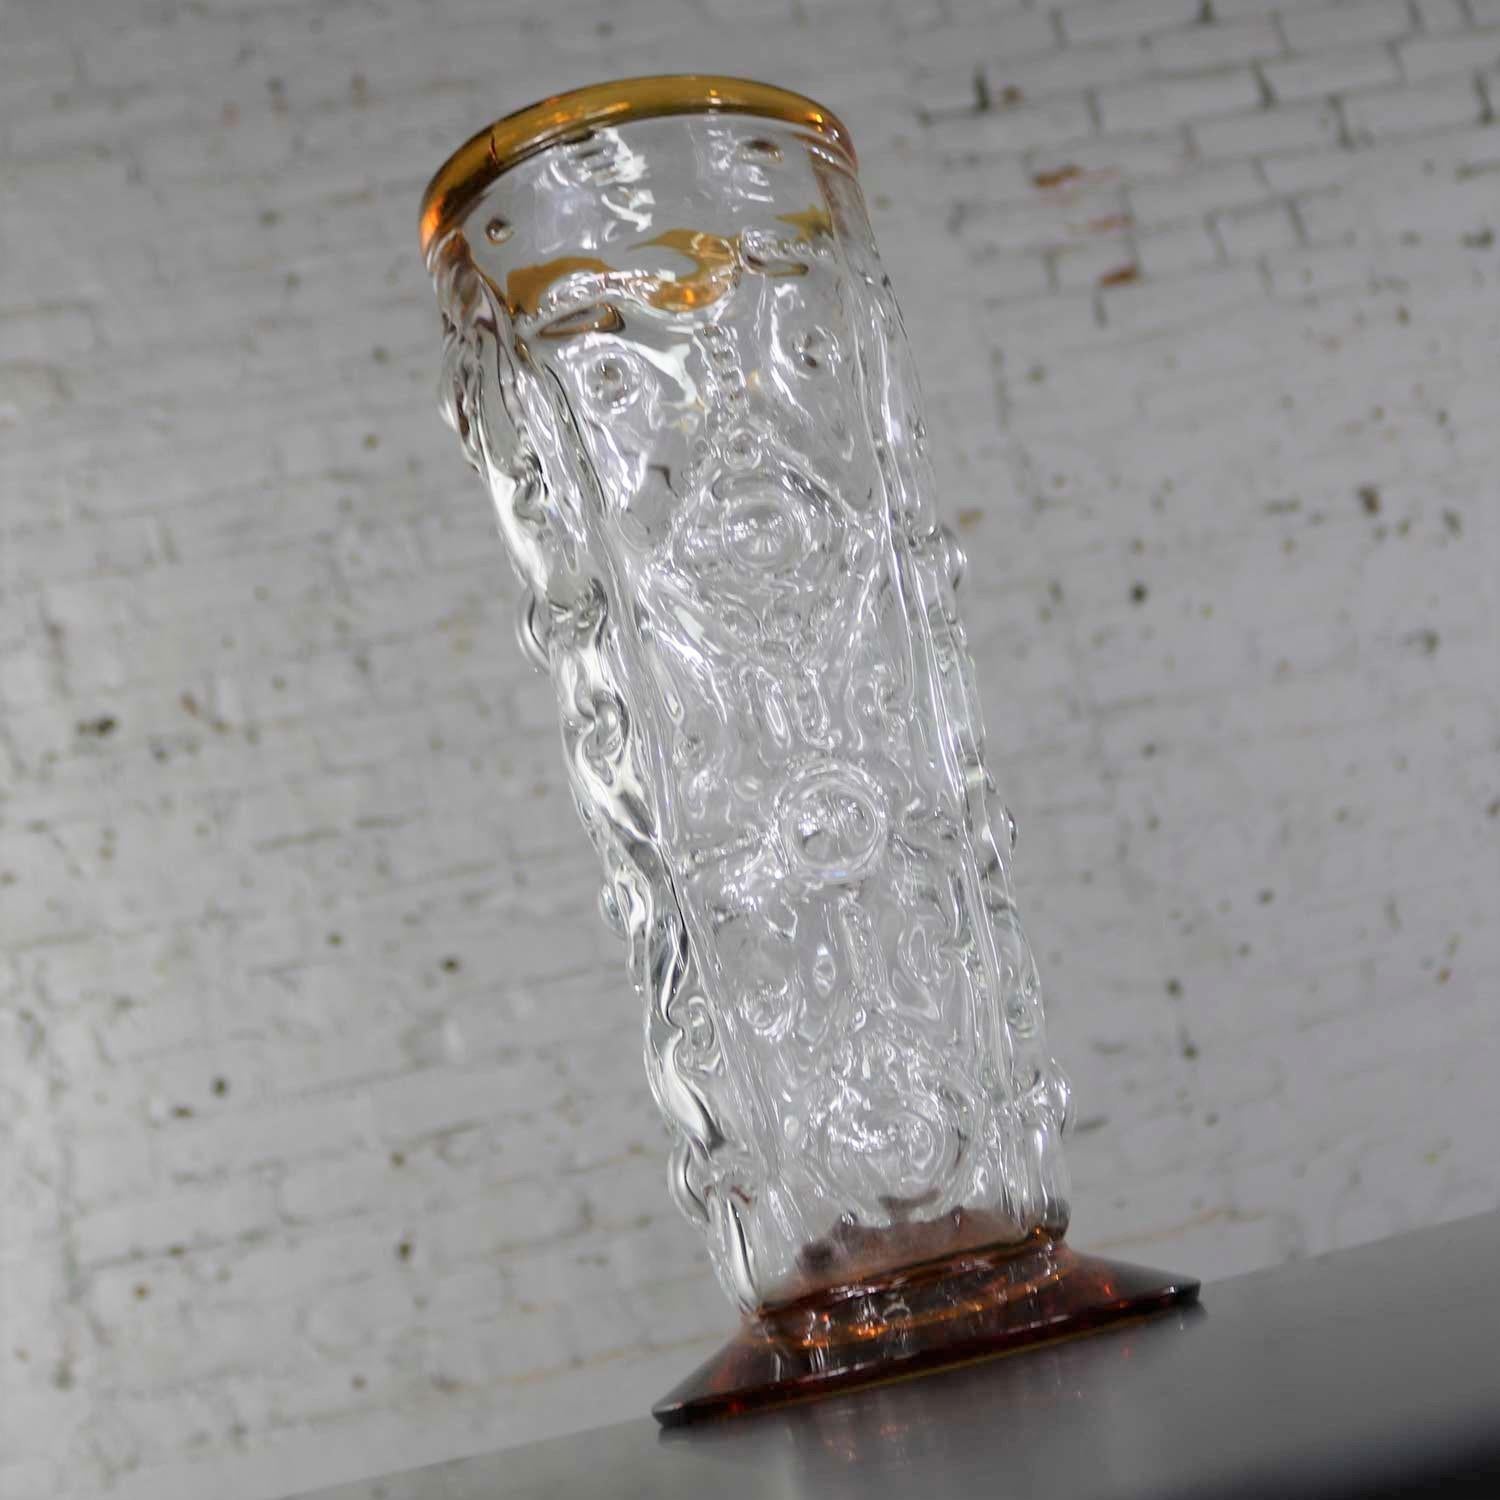 American Blenko Hand Blown Glass Vase #9426 in Crystal and Topaz by Hank Adams